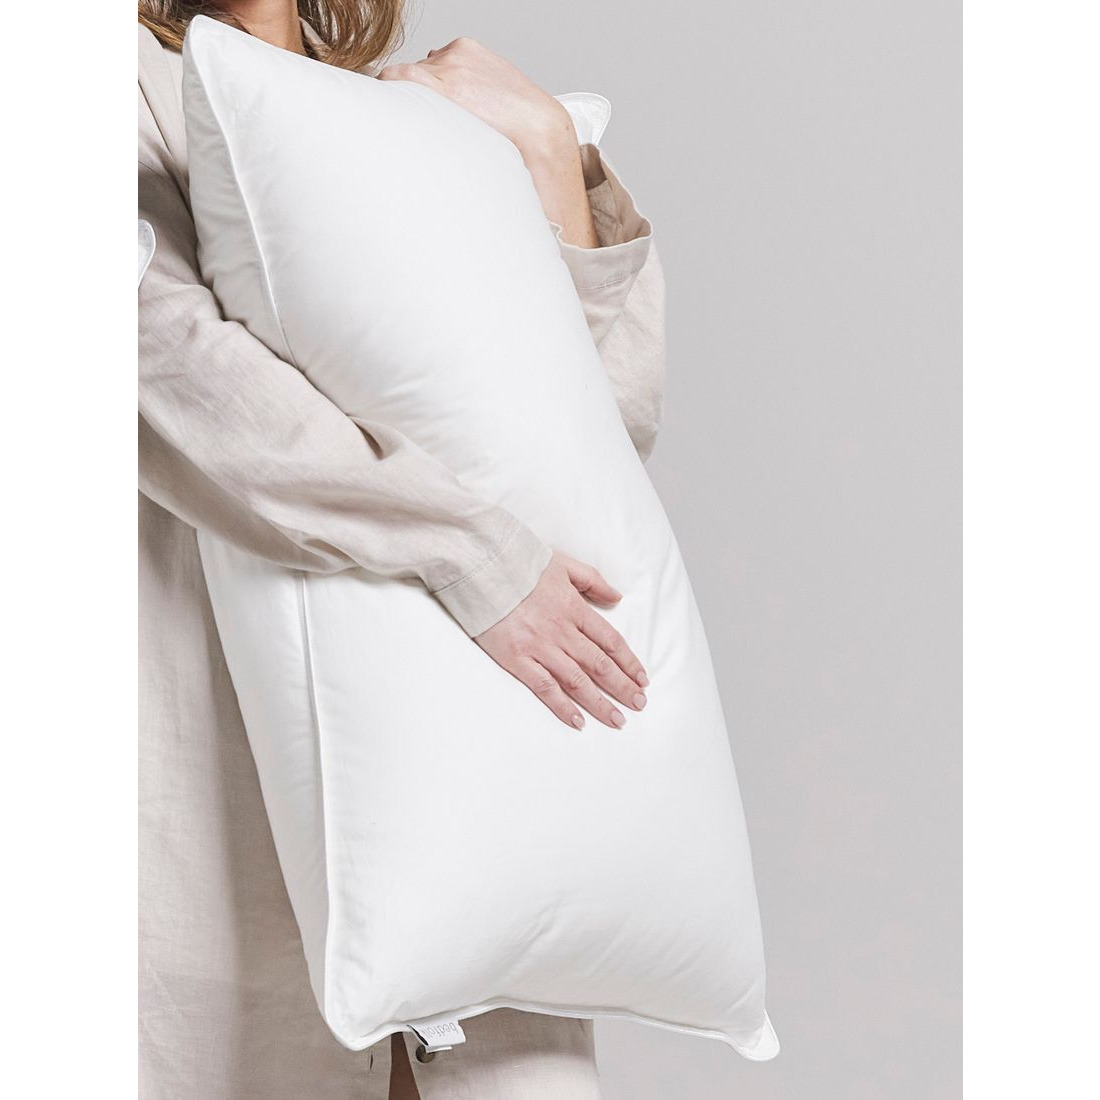 Bedfolk Recycled Duck Down Kingsize Pillow, Medium/Firm - image 1